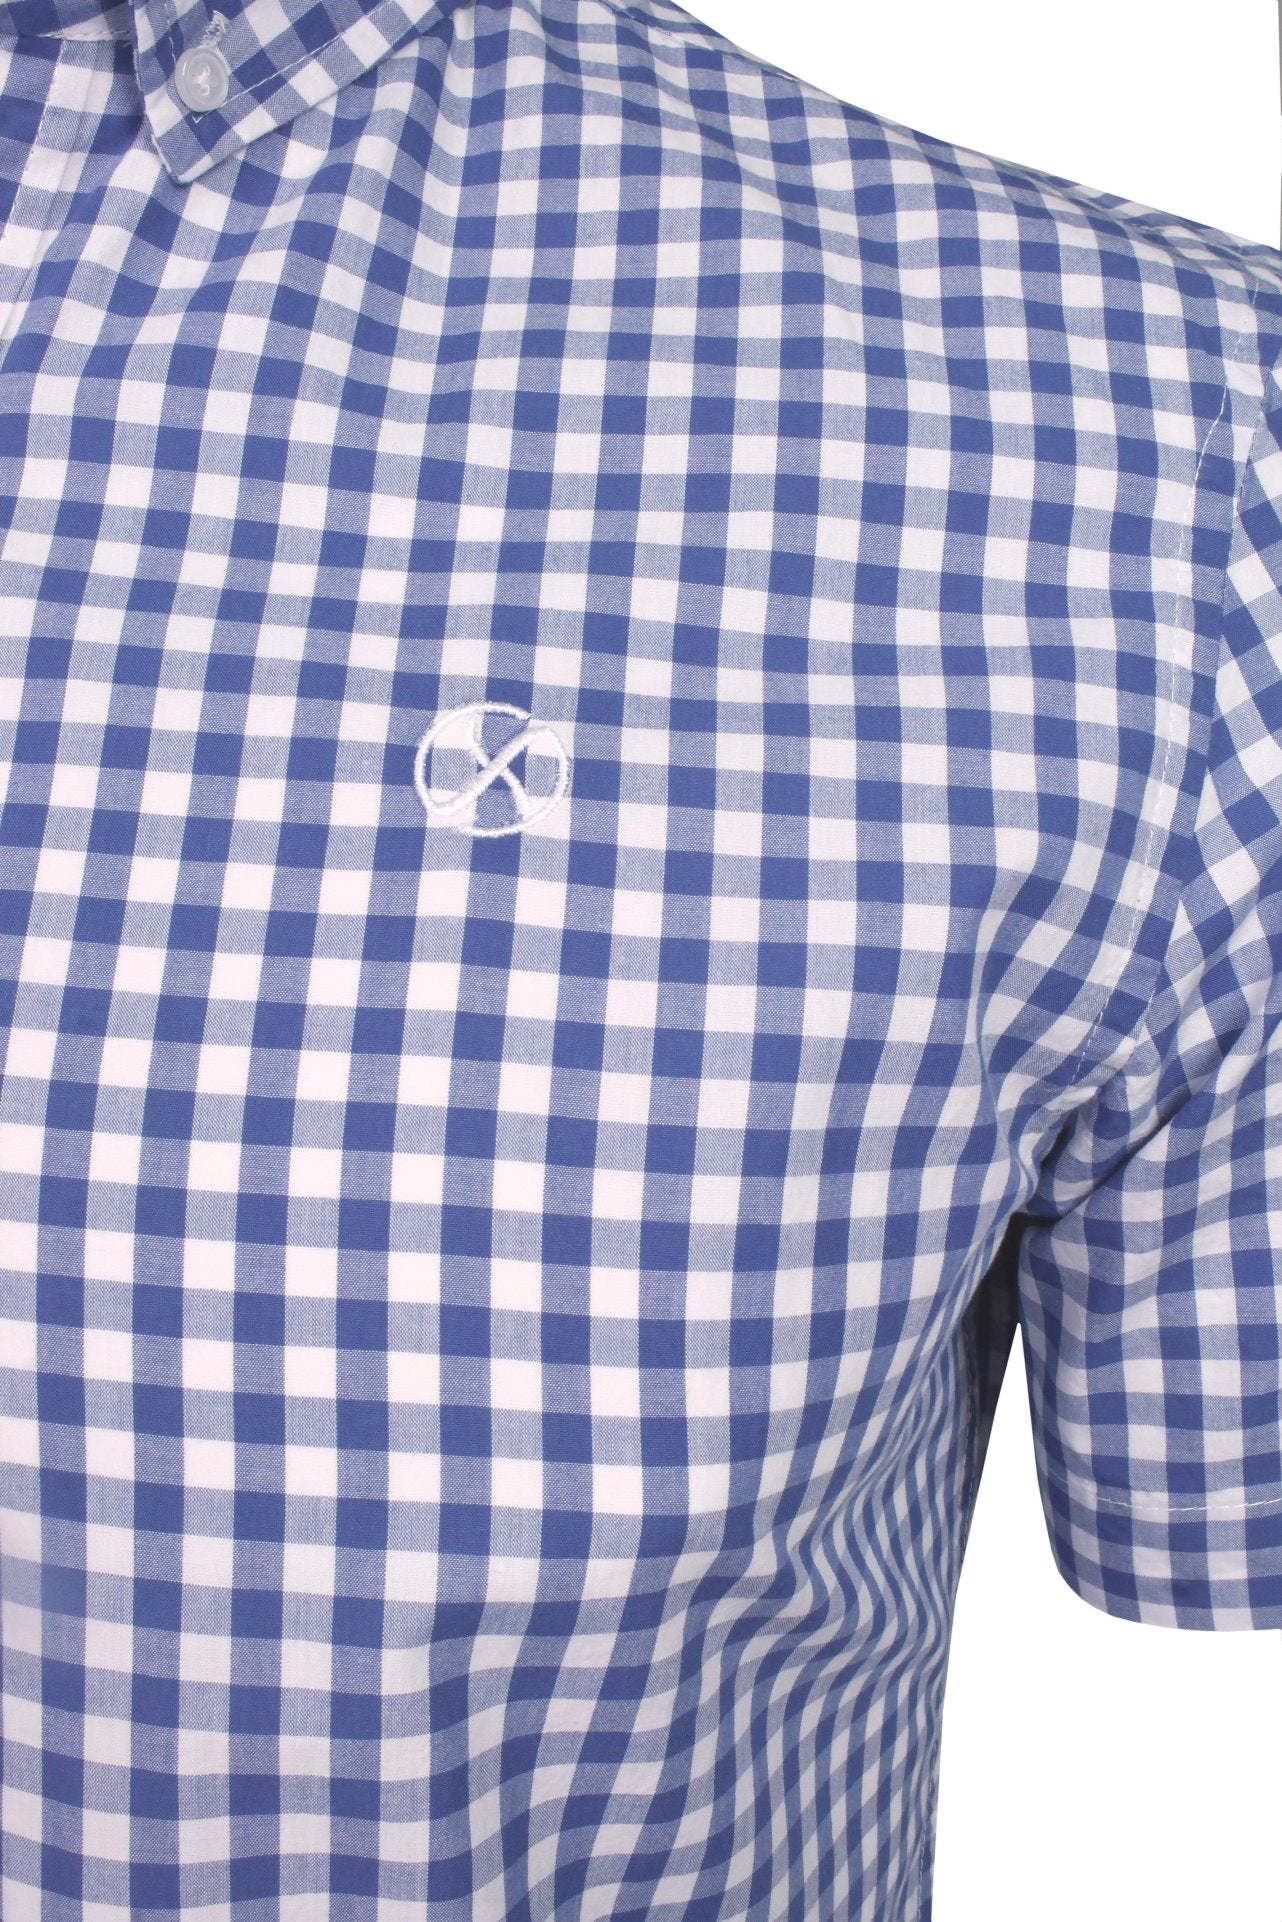 Xact Mens Cotton Gingham Check Shirt - Short Sleeved-2